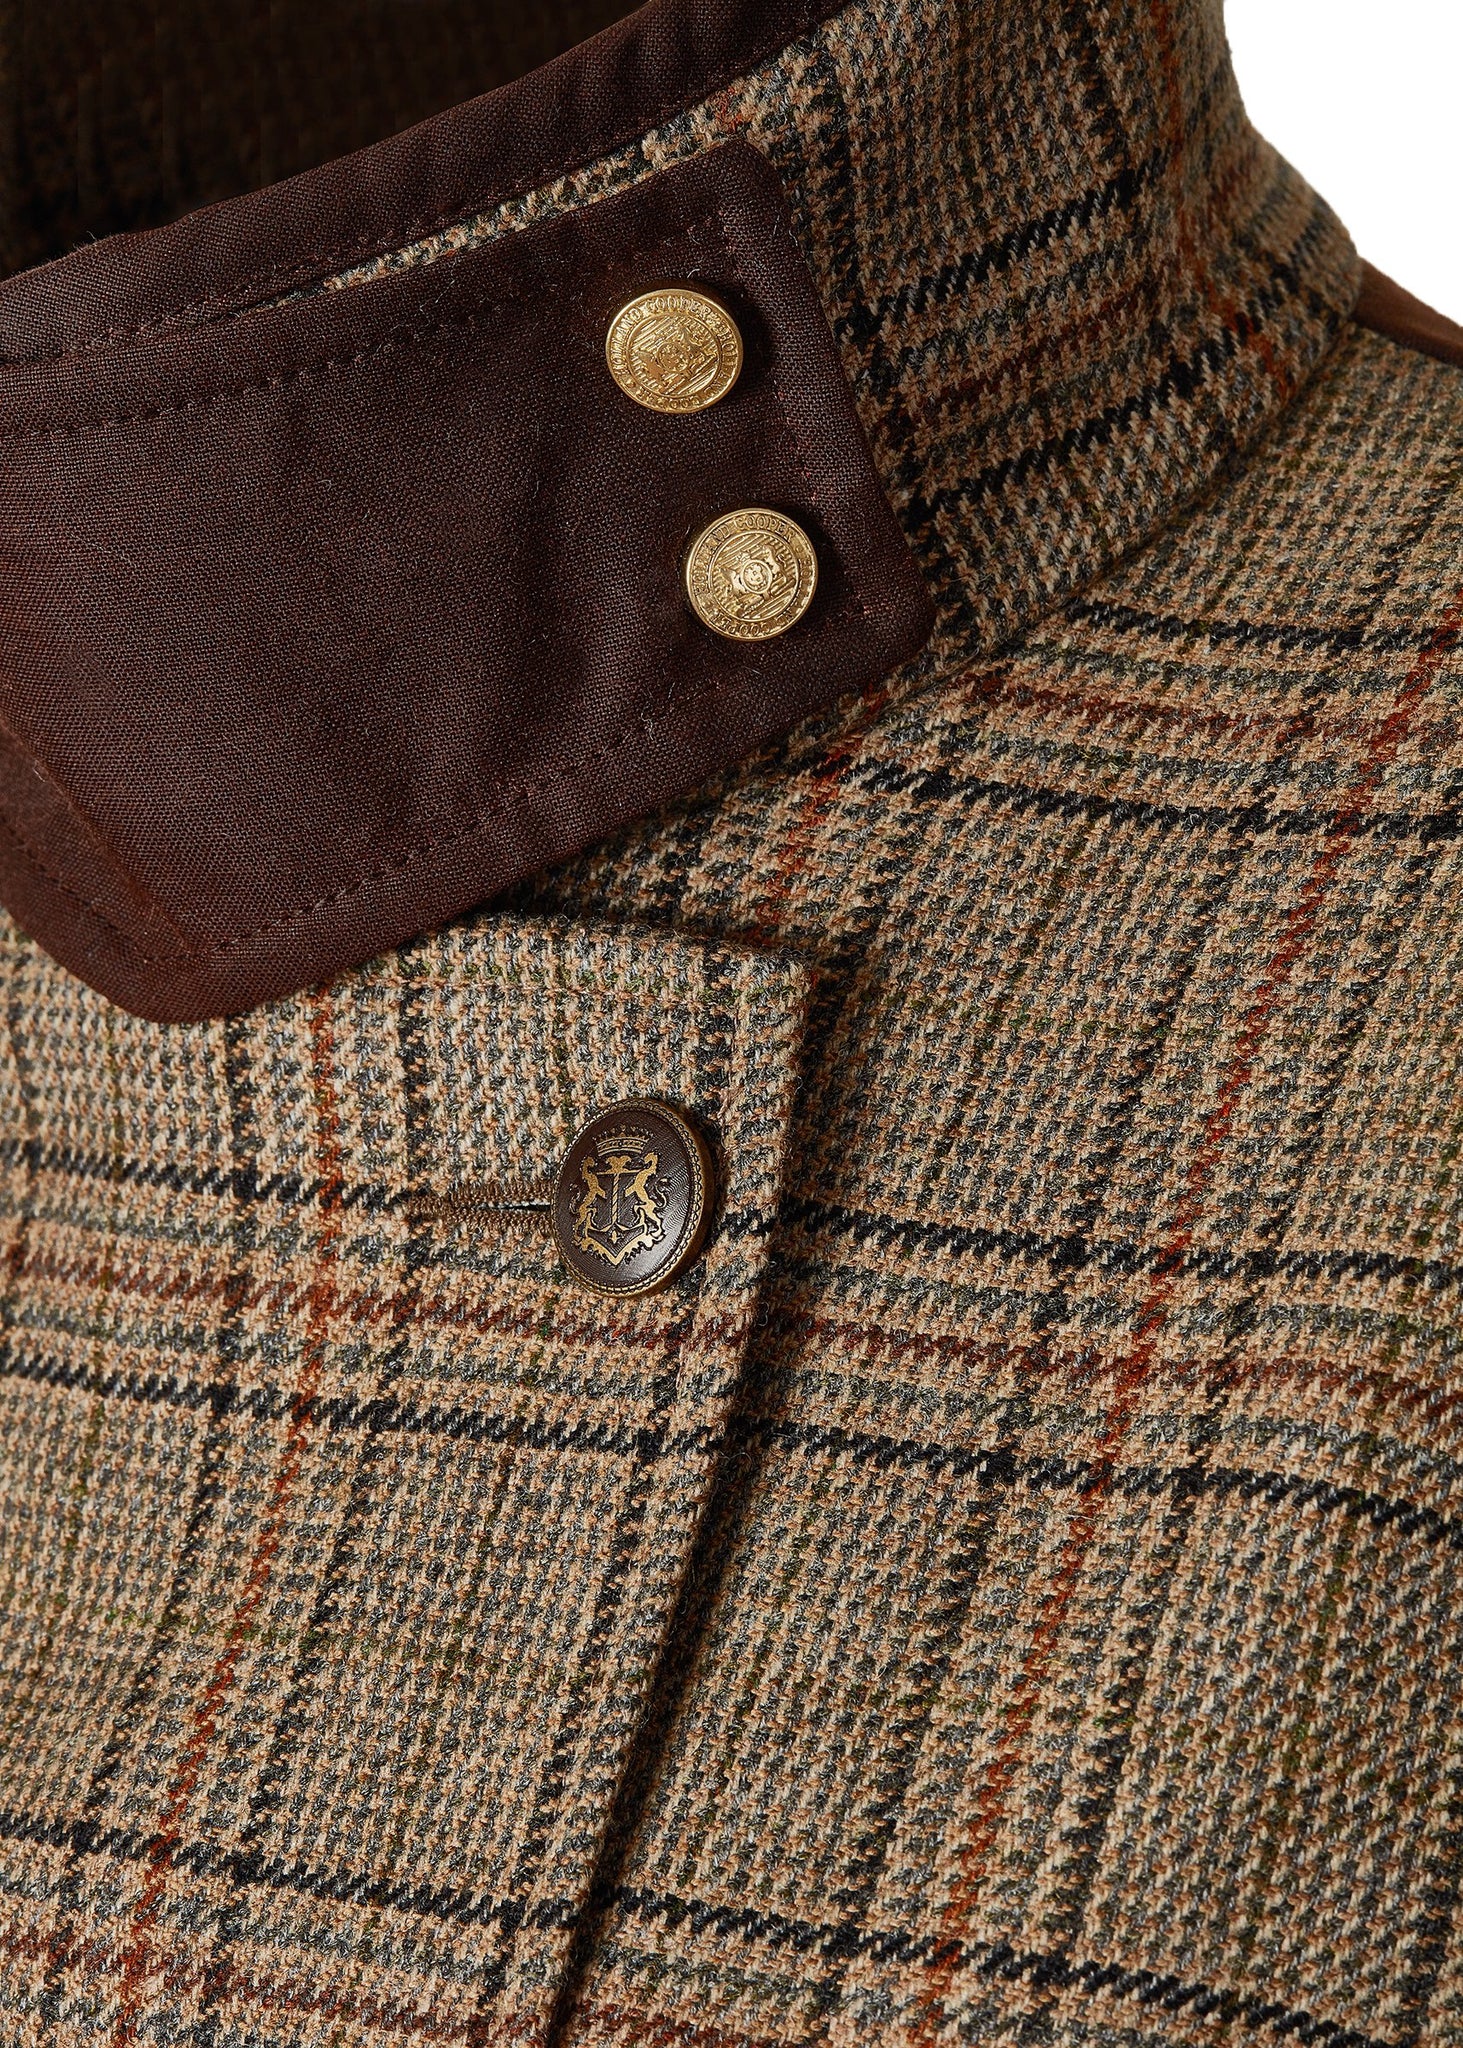 Front collar detail of womans brown tartan tweed field coat